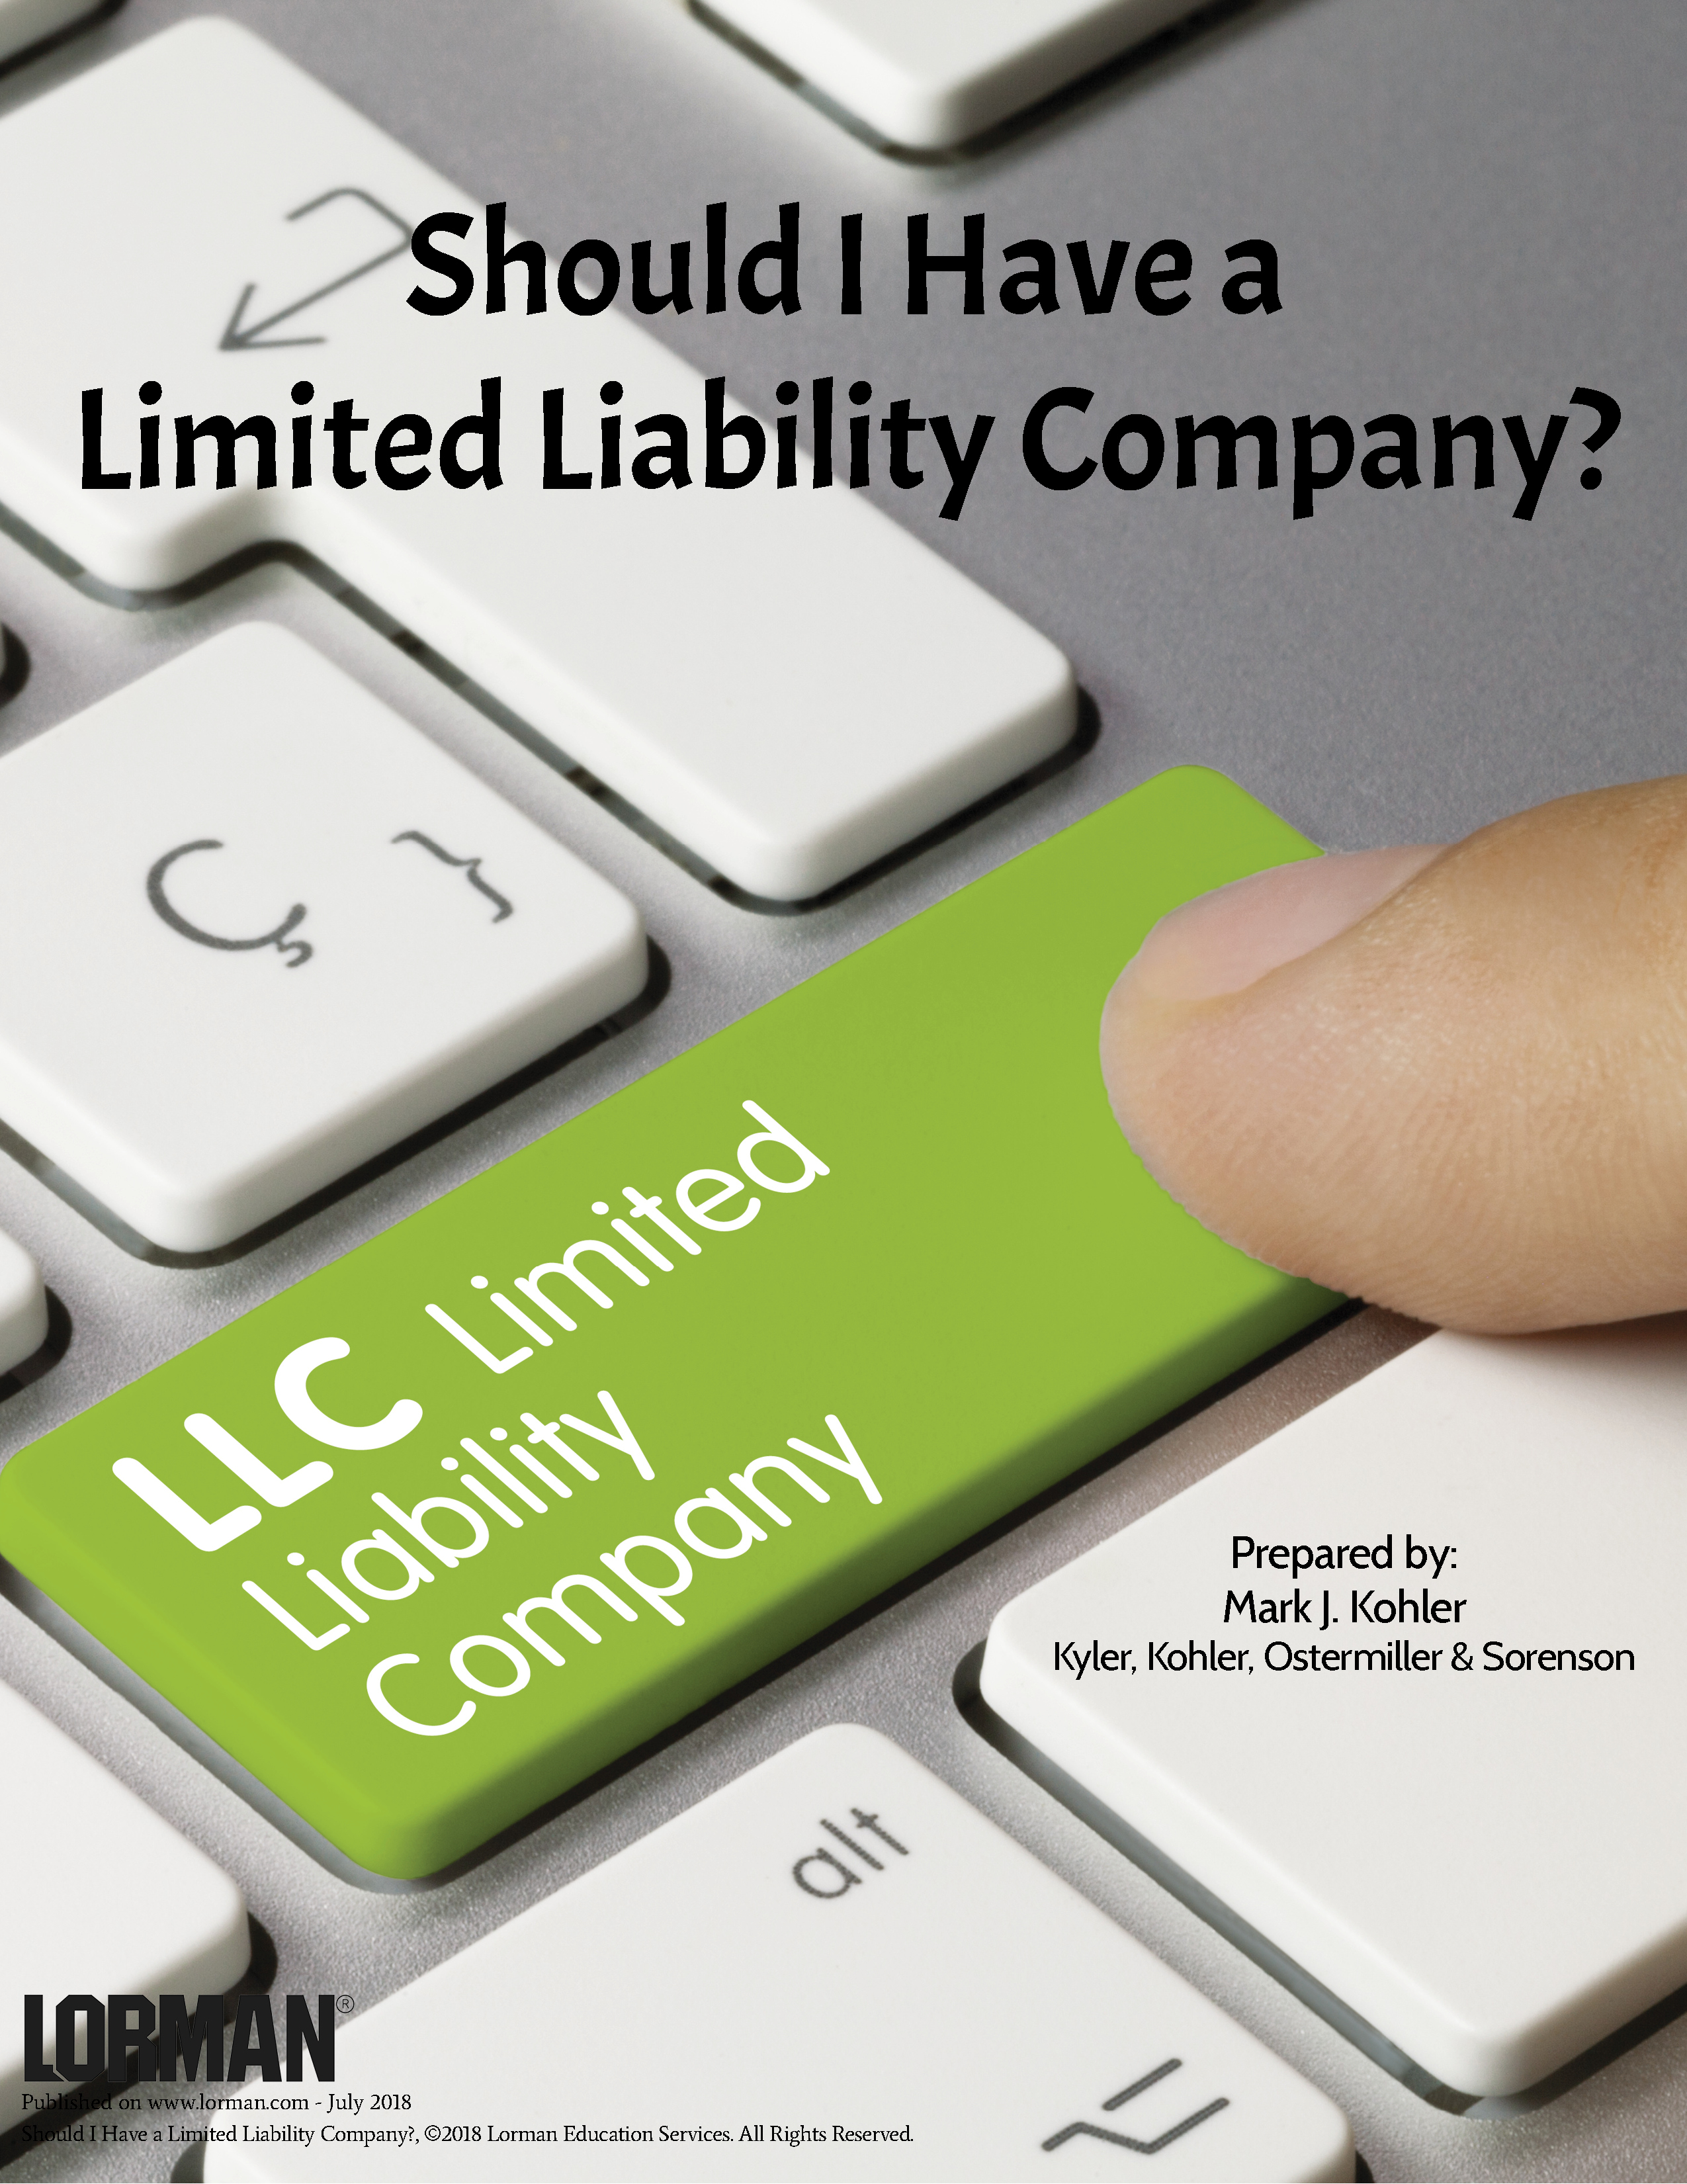 Should I Have a Limited Liability Company?